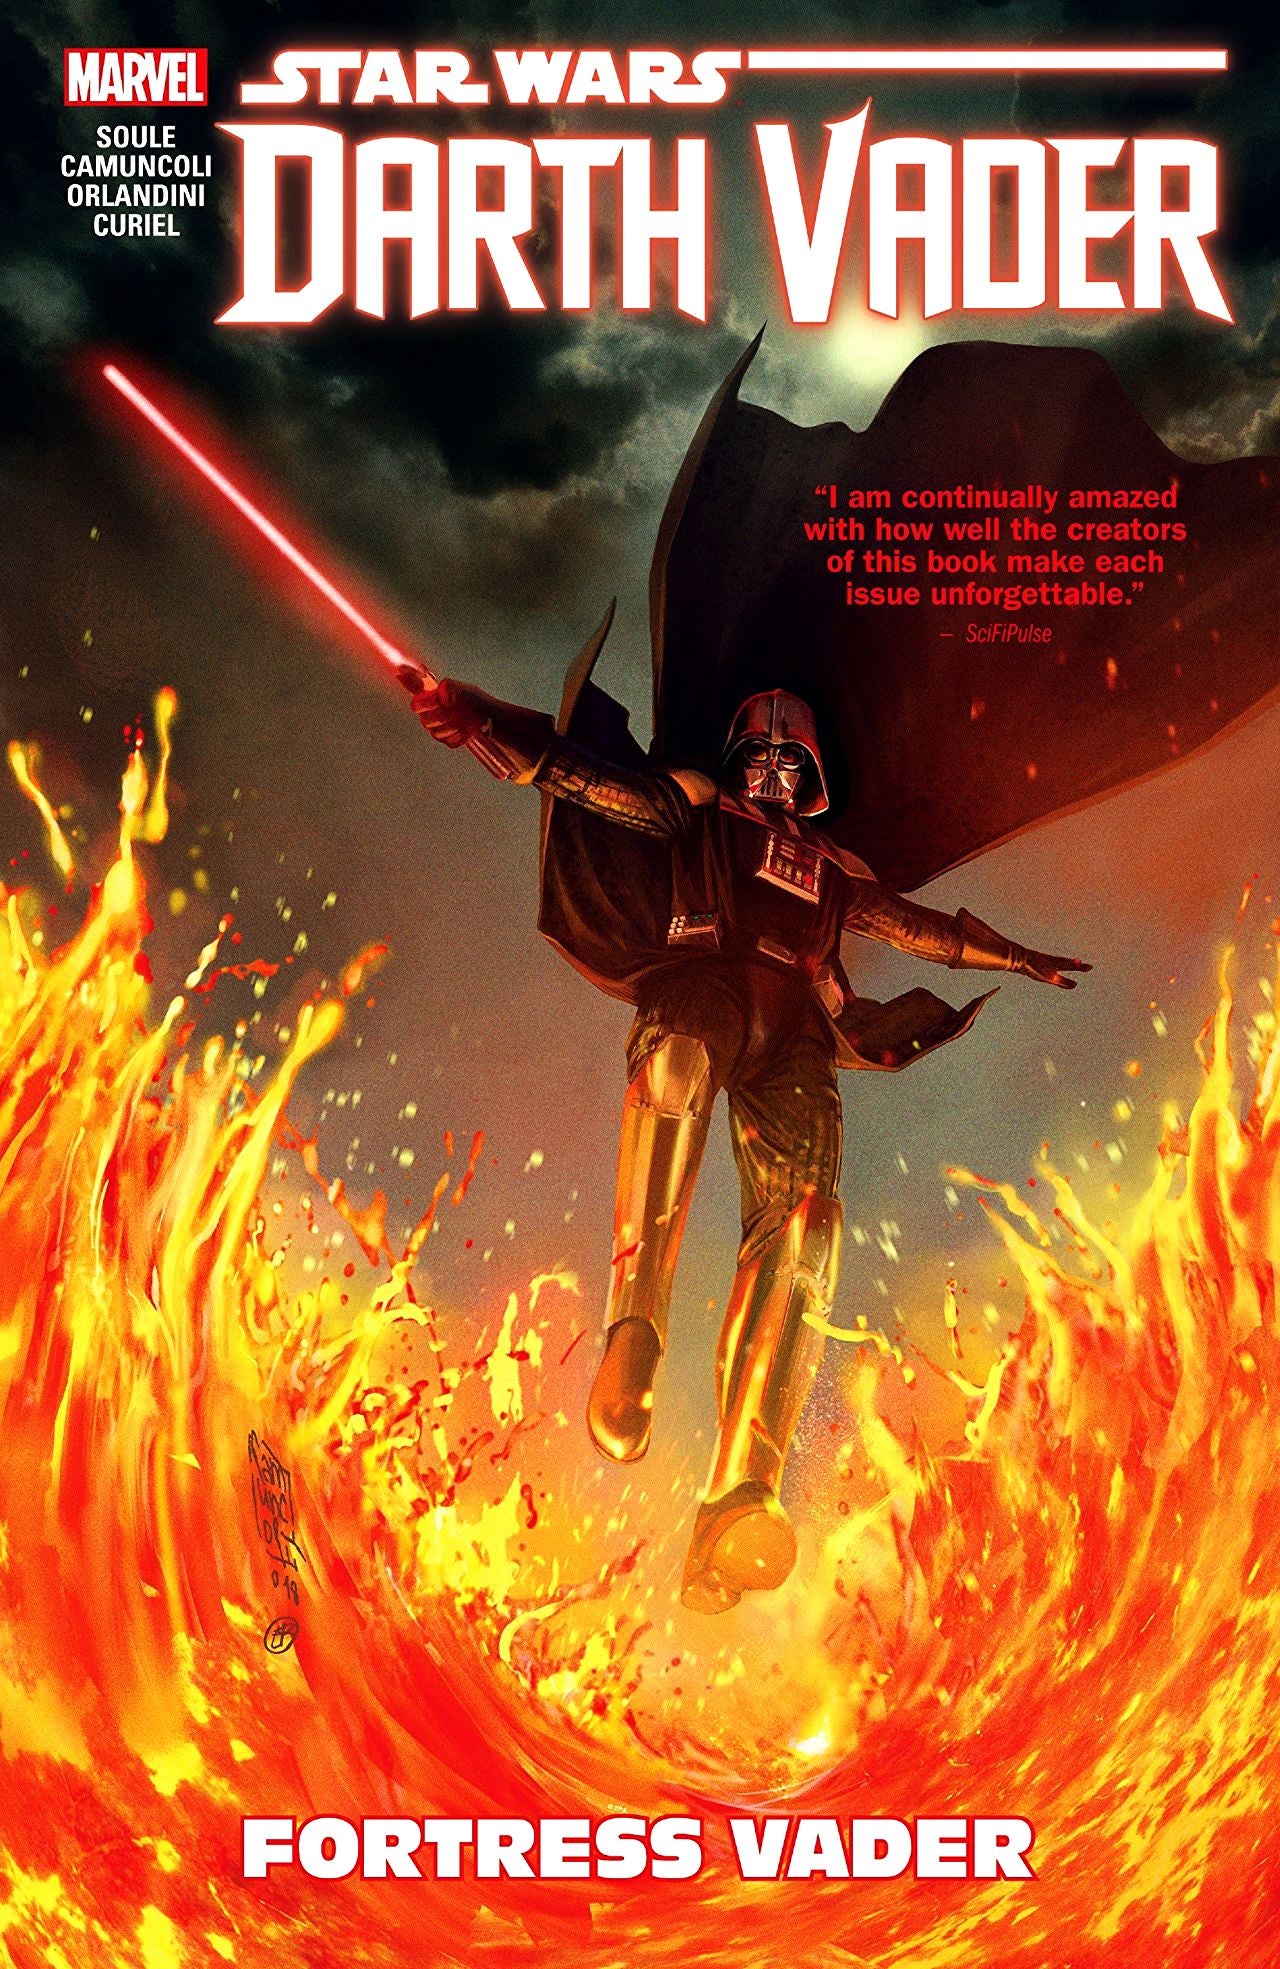 Star Wars - Darth Vader (2017) Dark Lord of the Sith Volume 4: Fortress Vader